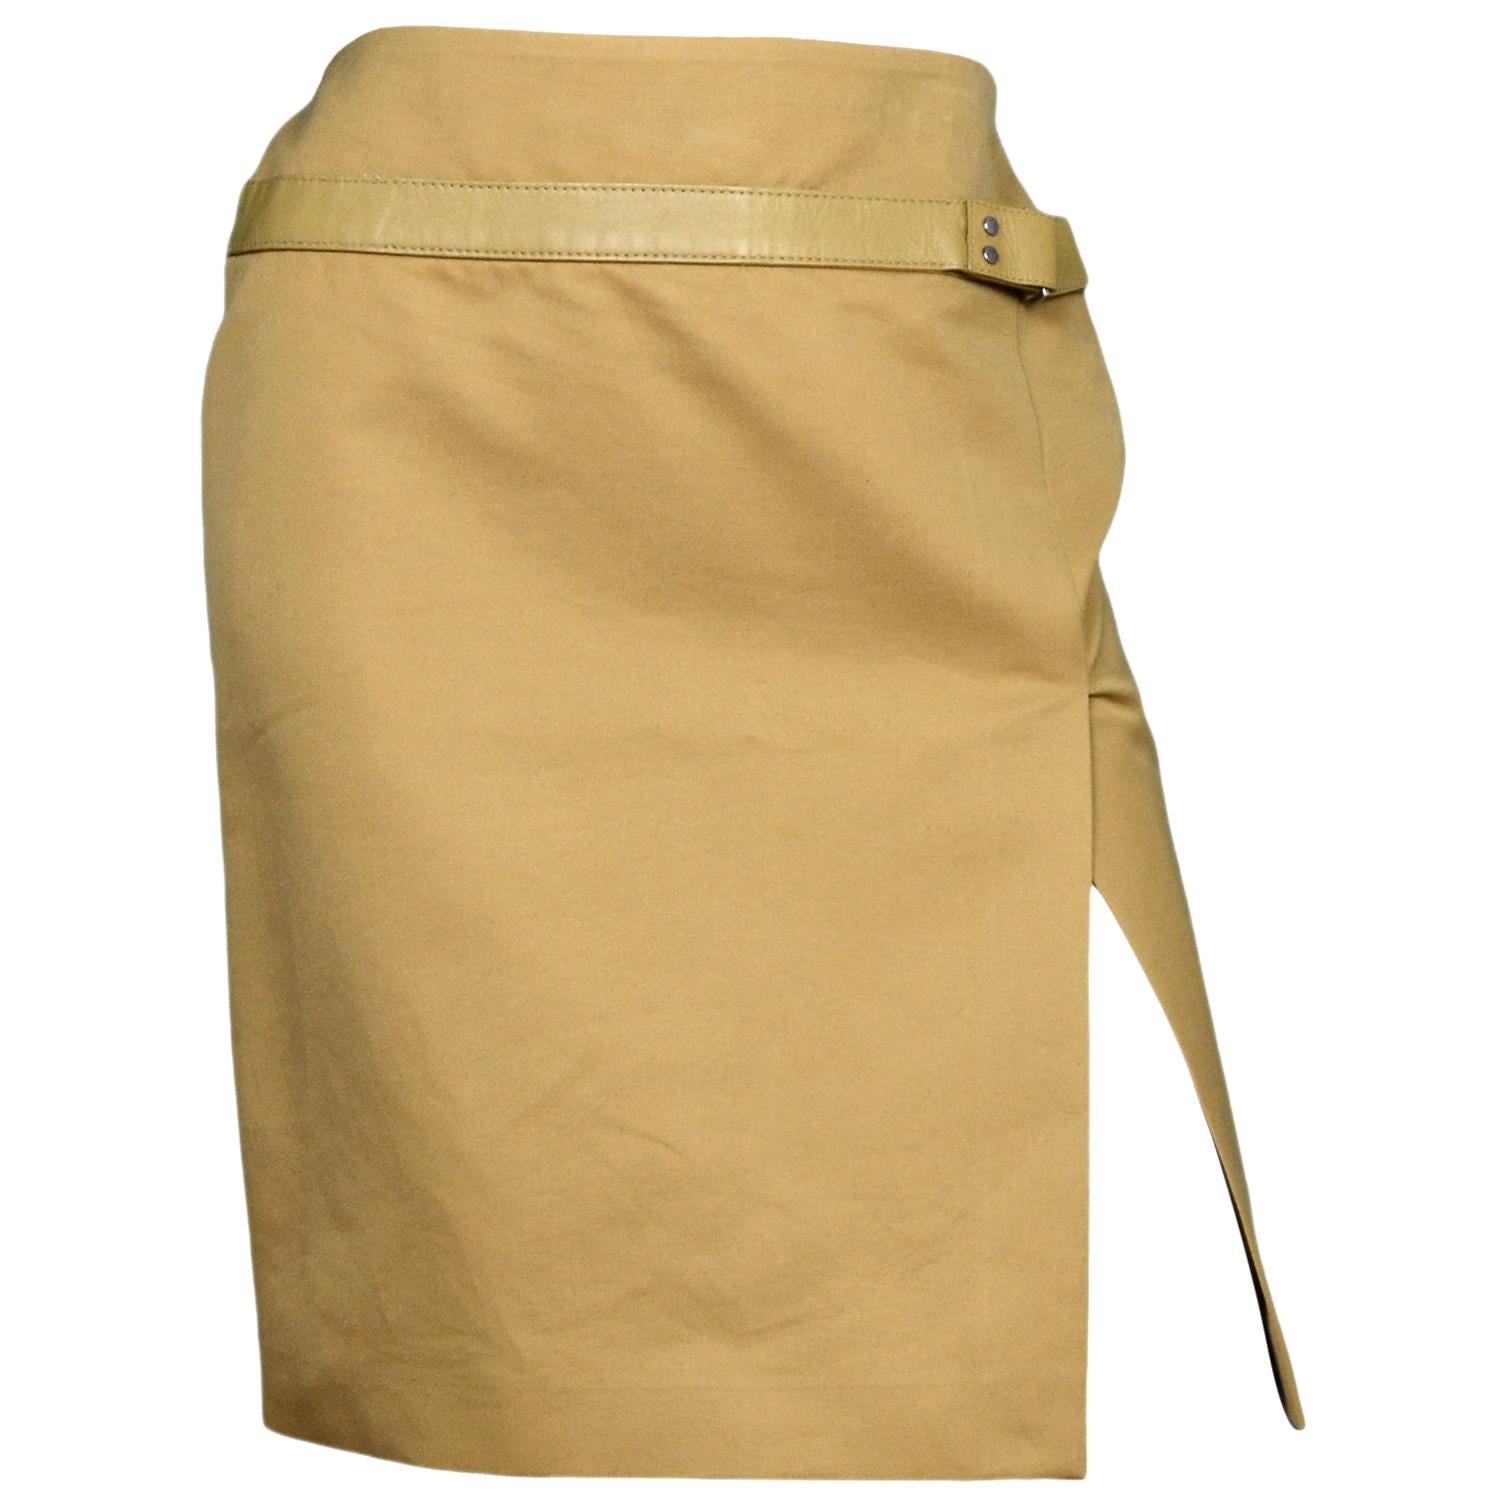 Gucci Gold/Tan Cotton Pencil Skirt W/ Side Slit & Leather Trim Sz 40